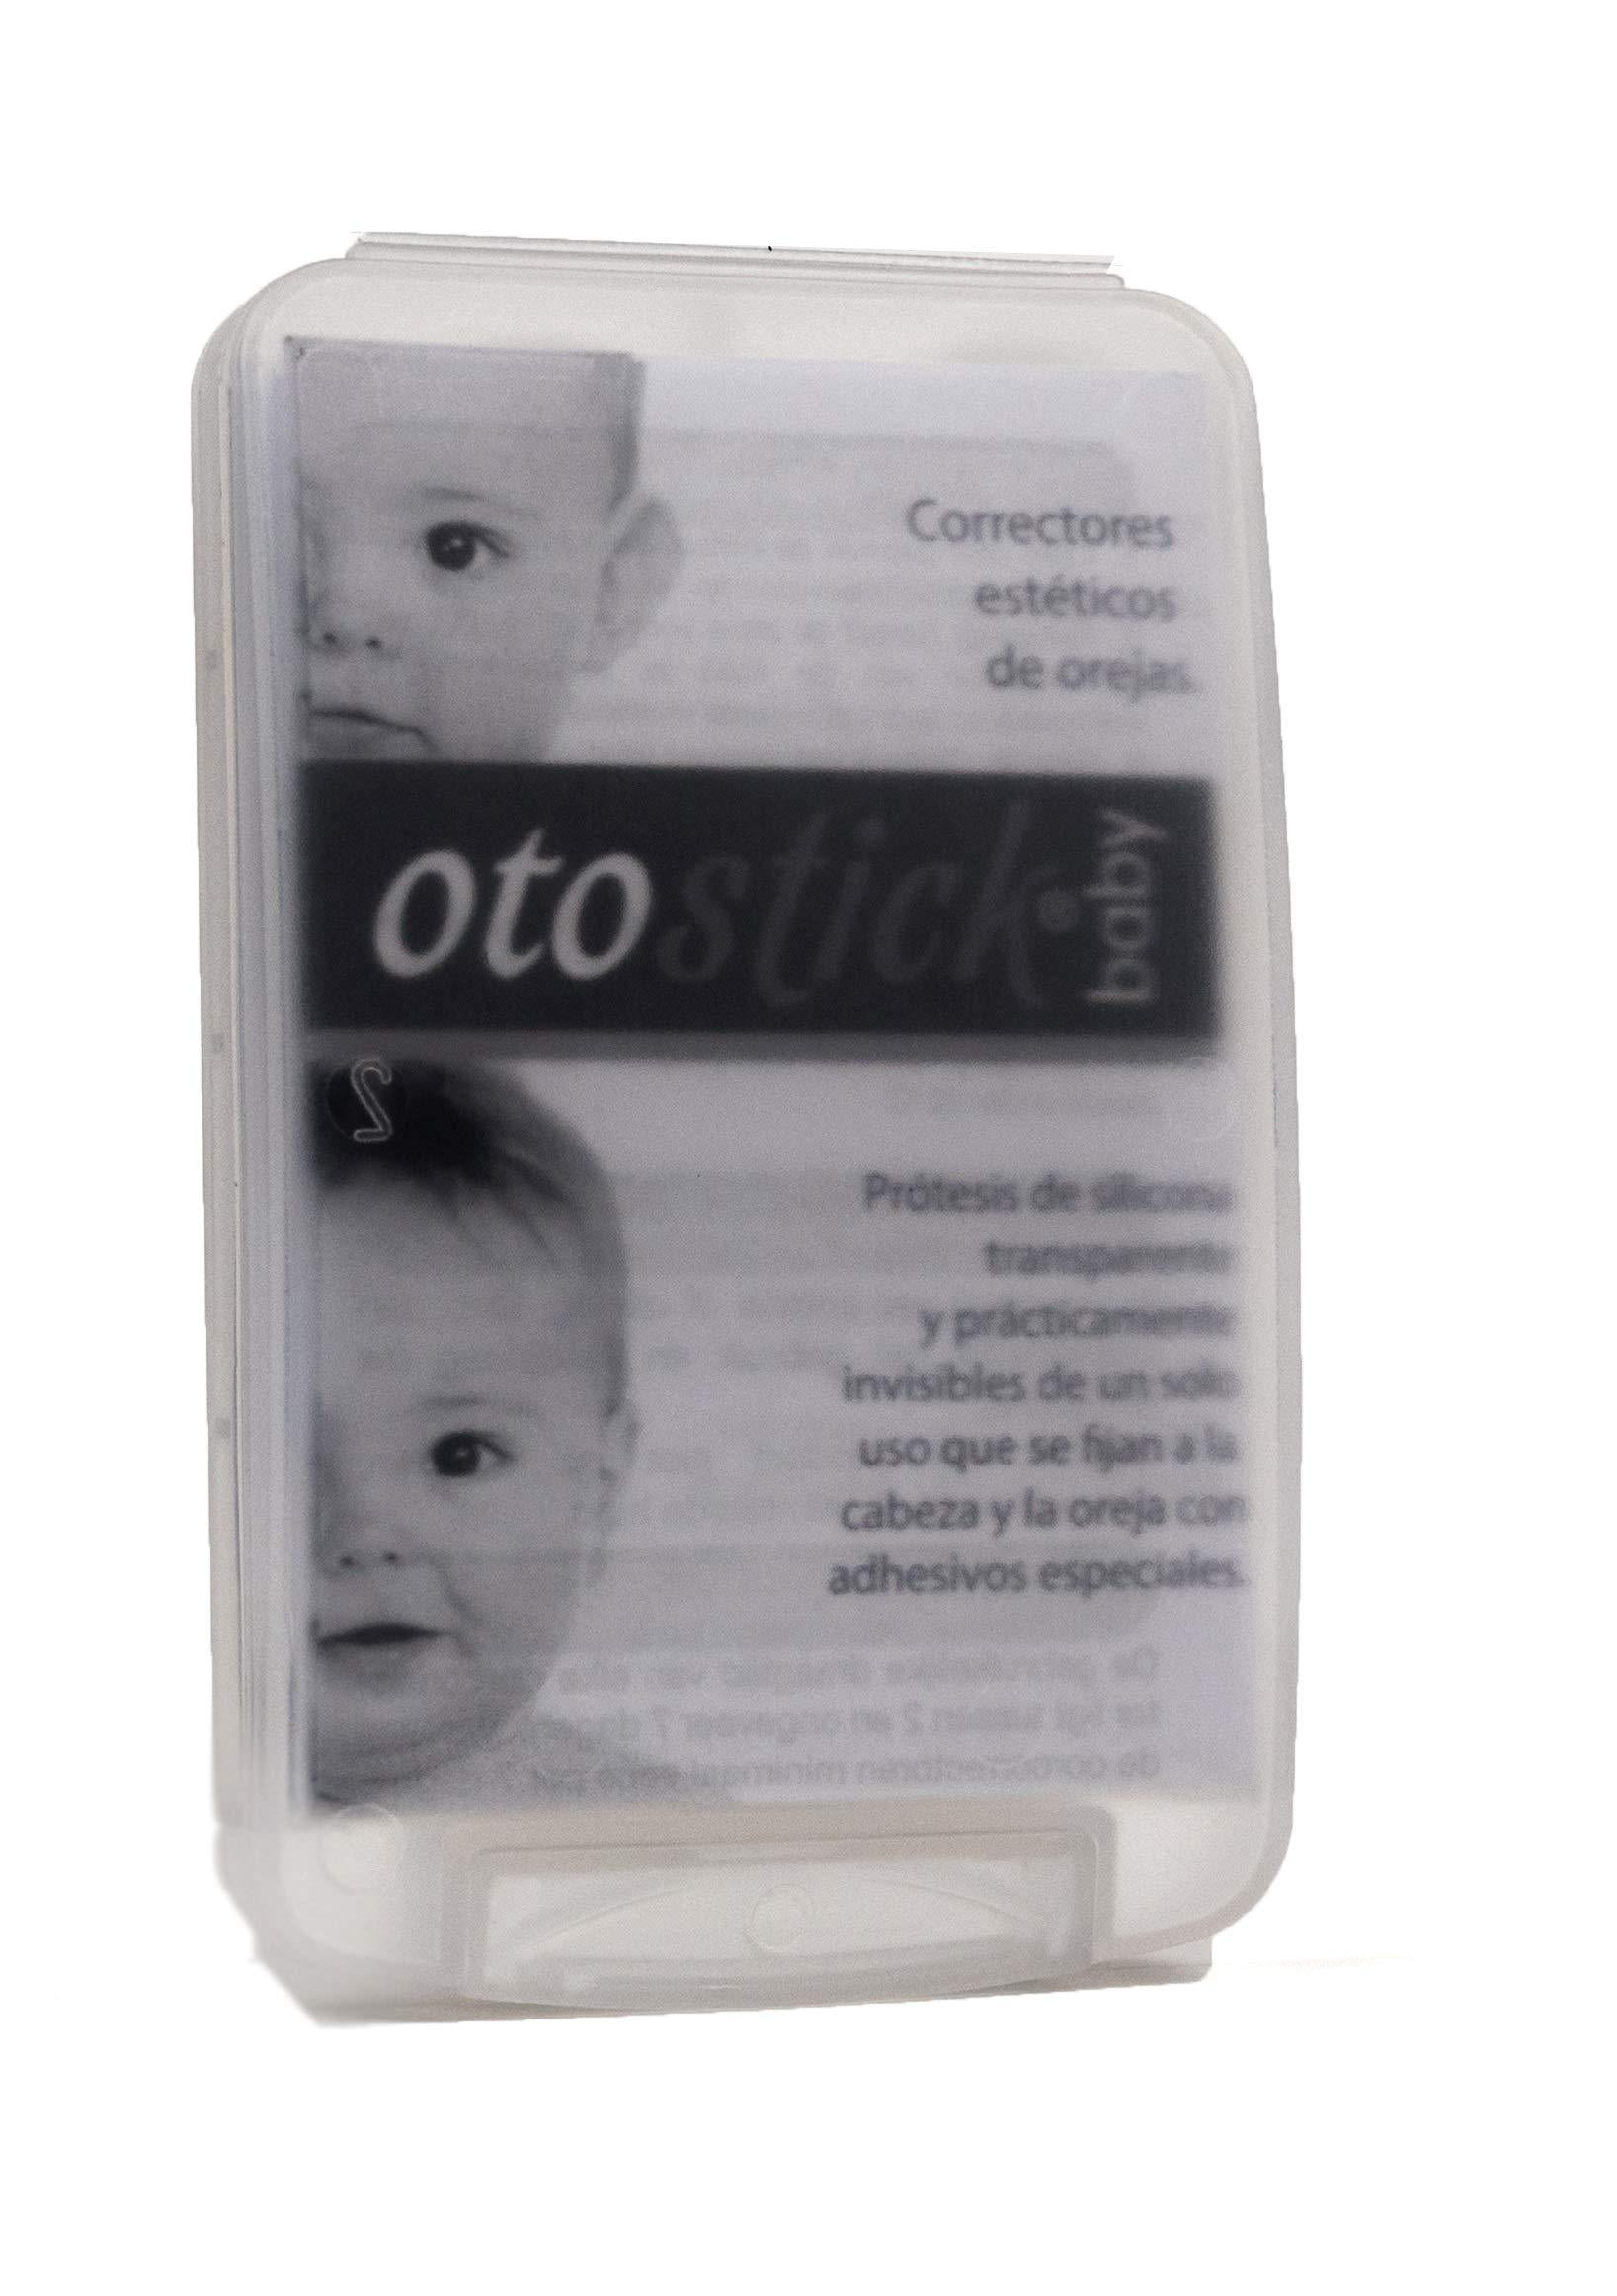 Otostick® Baby 1 Unit